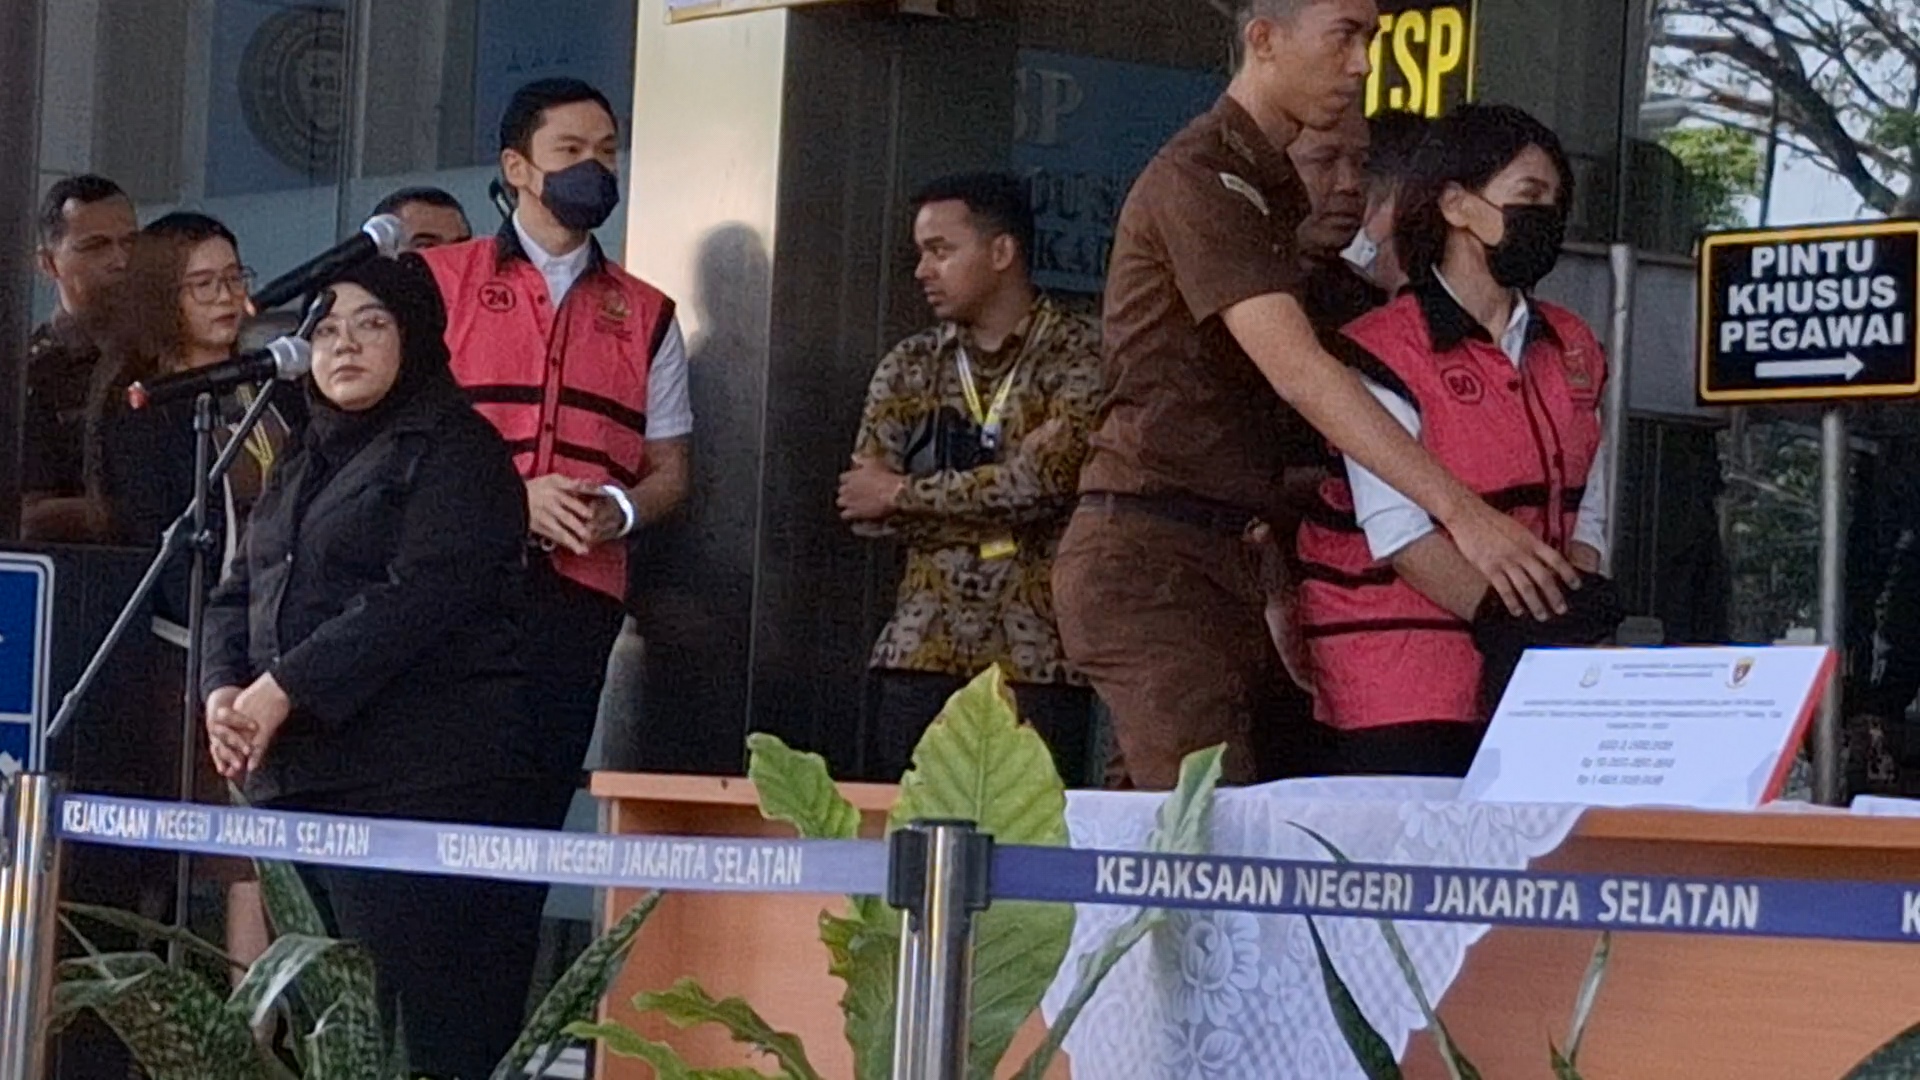 Penampakan Harvey Moeis dan Helena Lim Dilimpahkan ke Kejari Jakarta Selatan